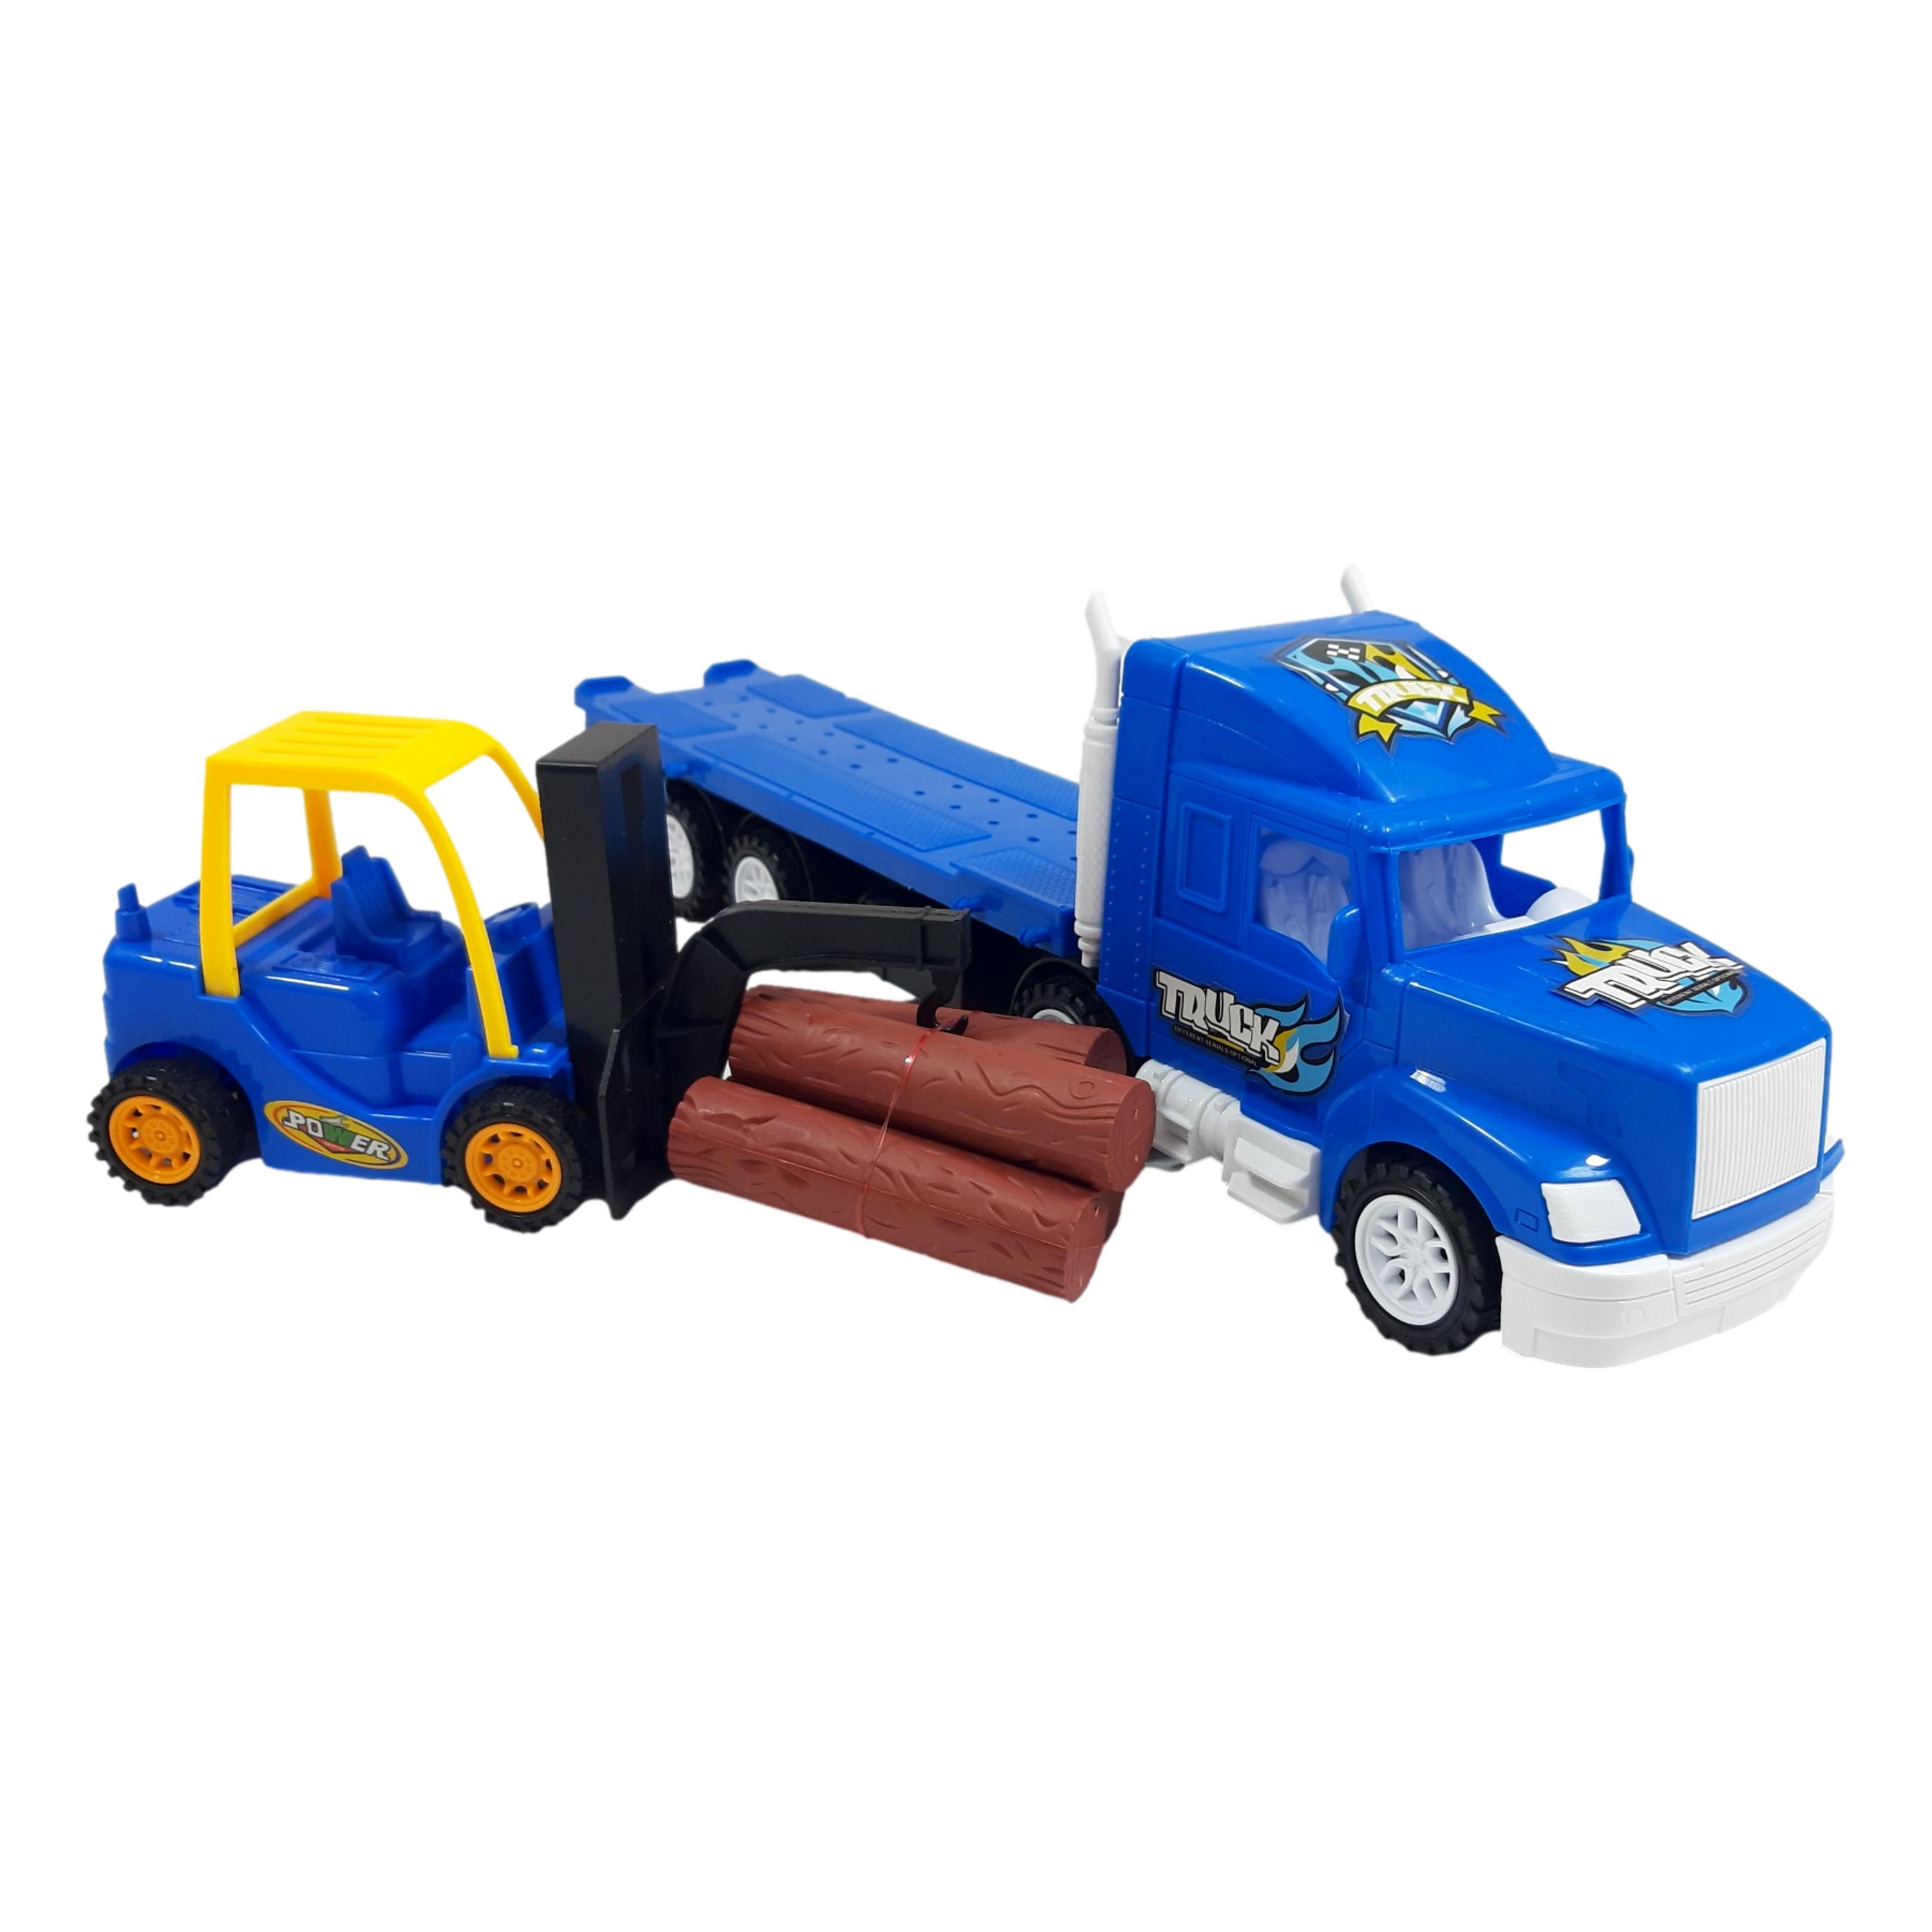 Set 2 masinute,1 X Tractor inertial, 1 x,motostivuitor cu lemne, cabina albastru